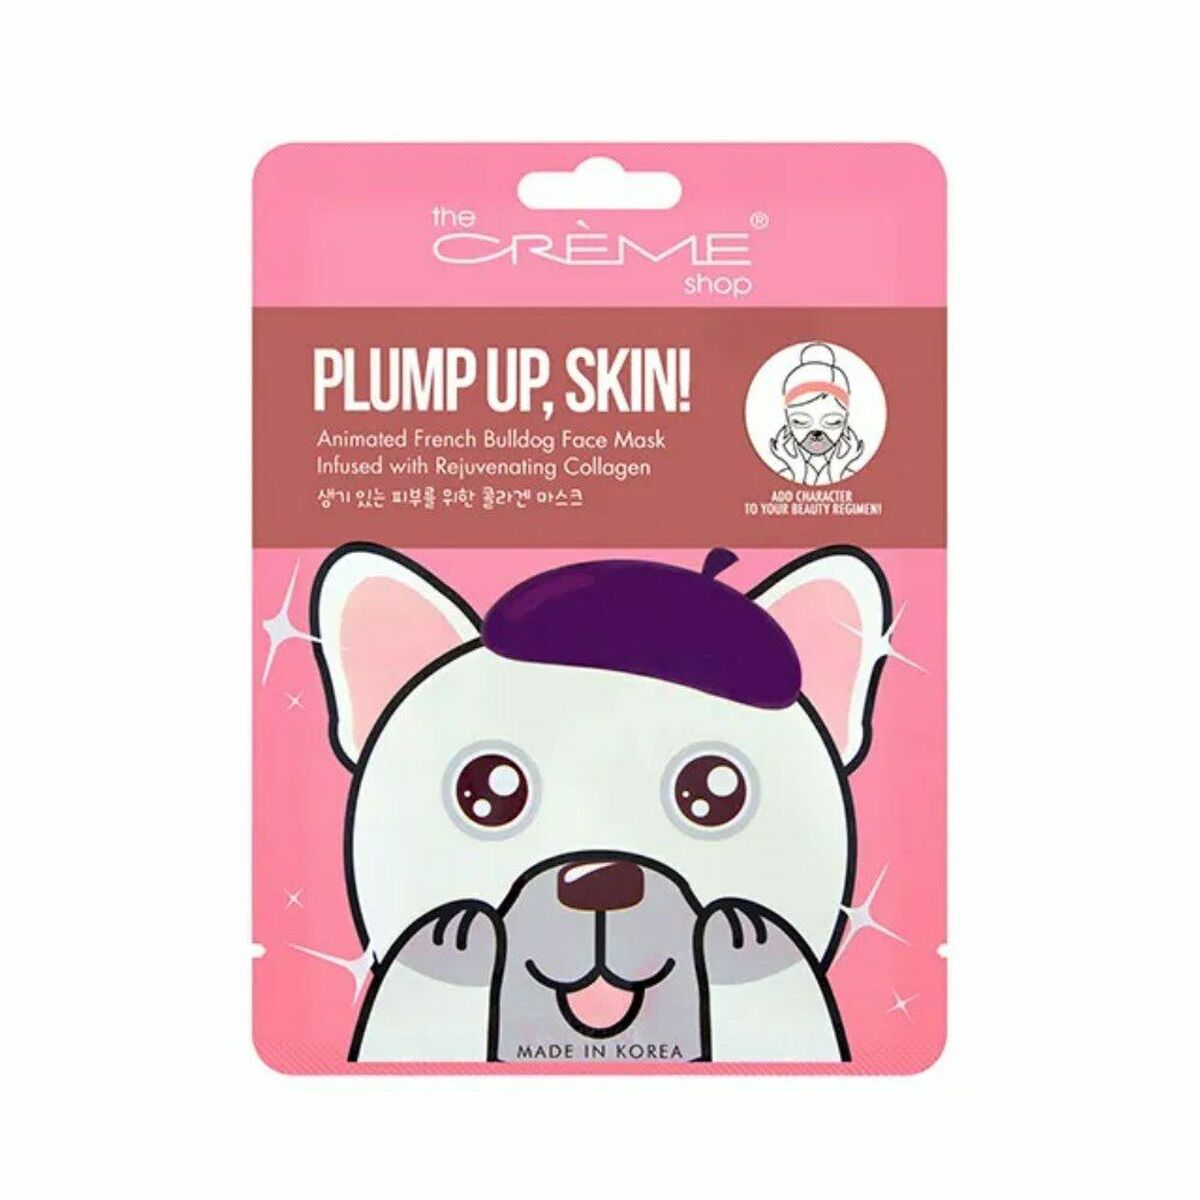 Facial Maska The Crème Shop Plump Up francoski buldog (25 g)